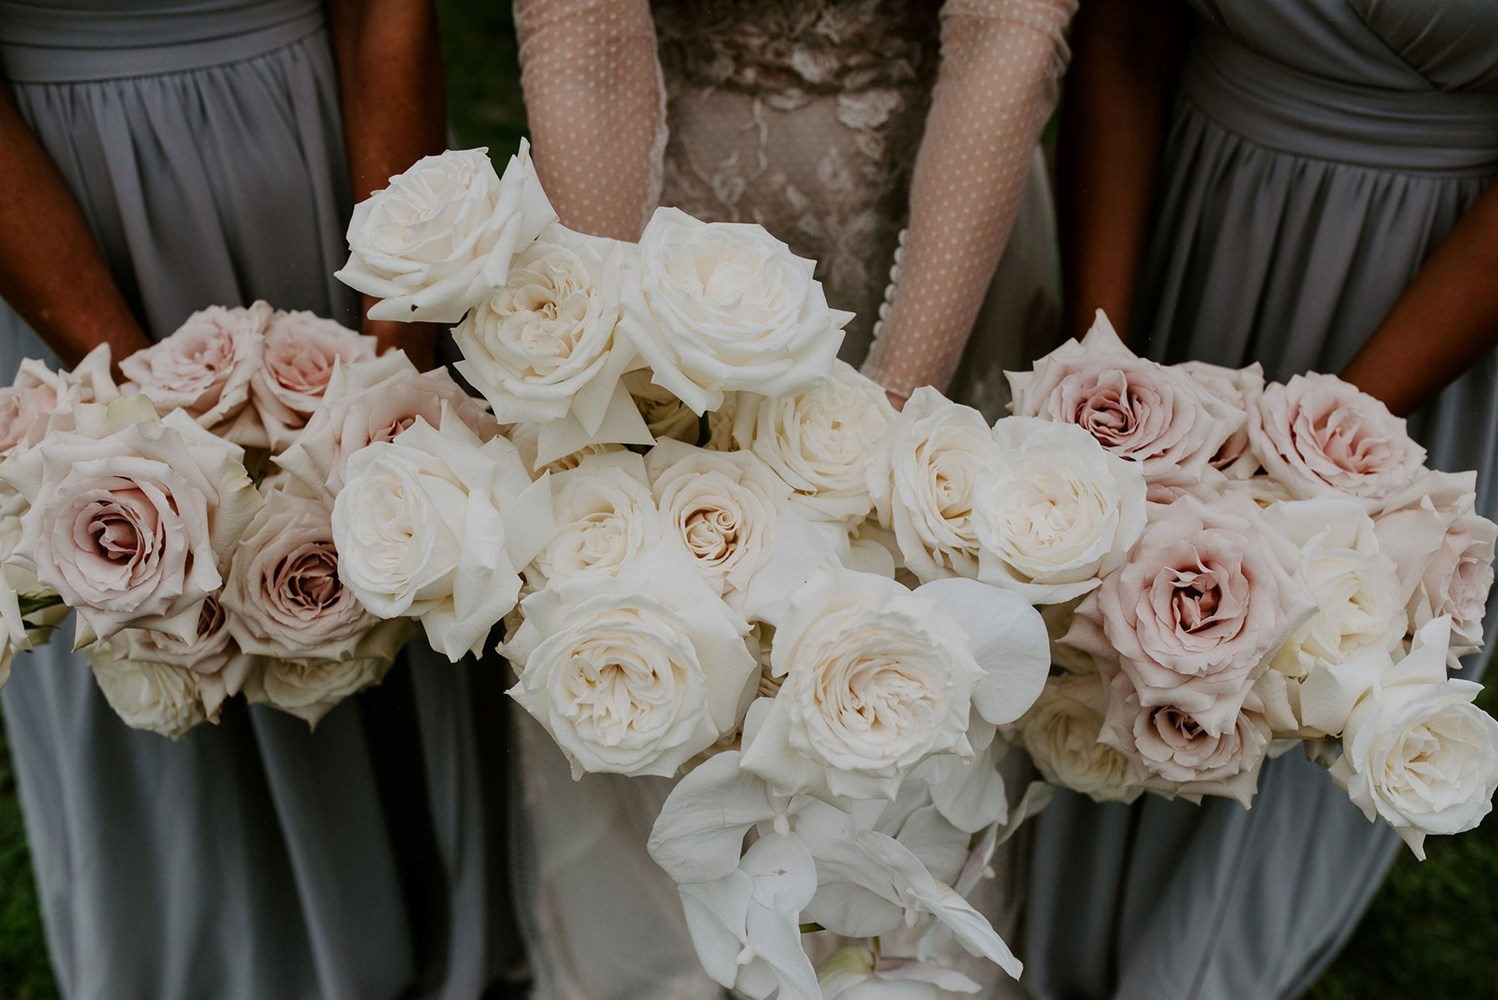 Main image: 12 Pretty Bridal Bouquets by Australian Floral Designers